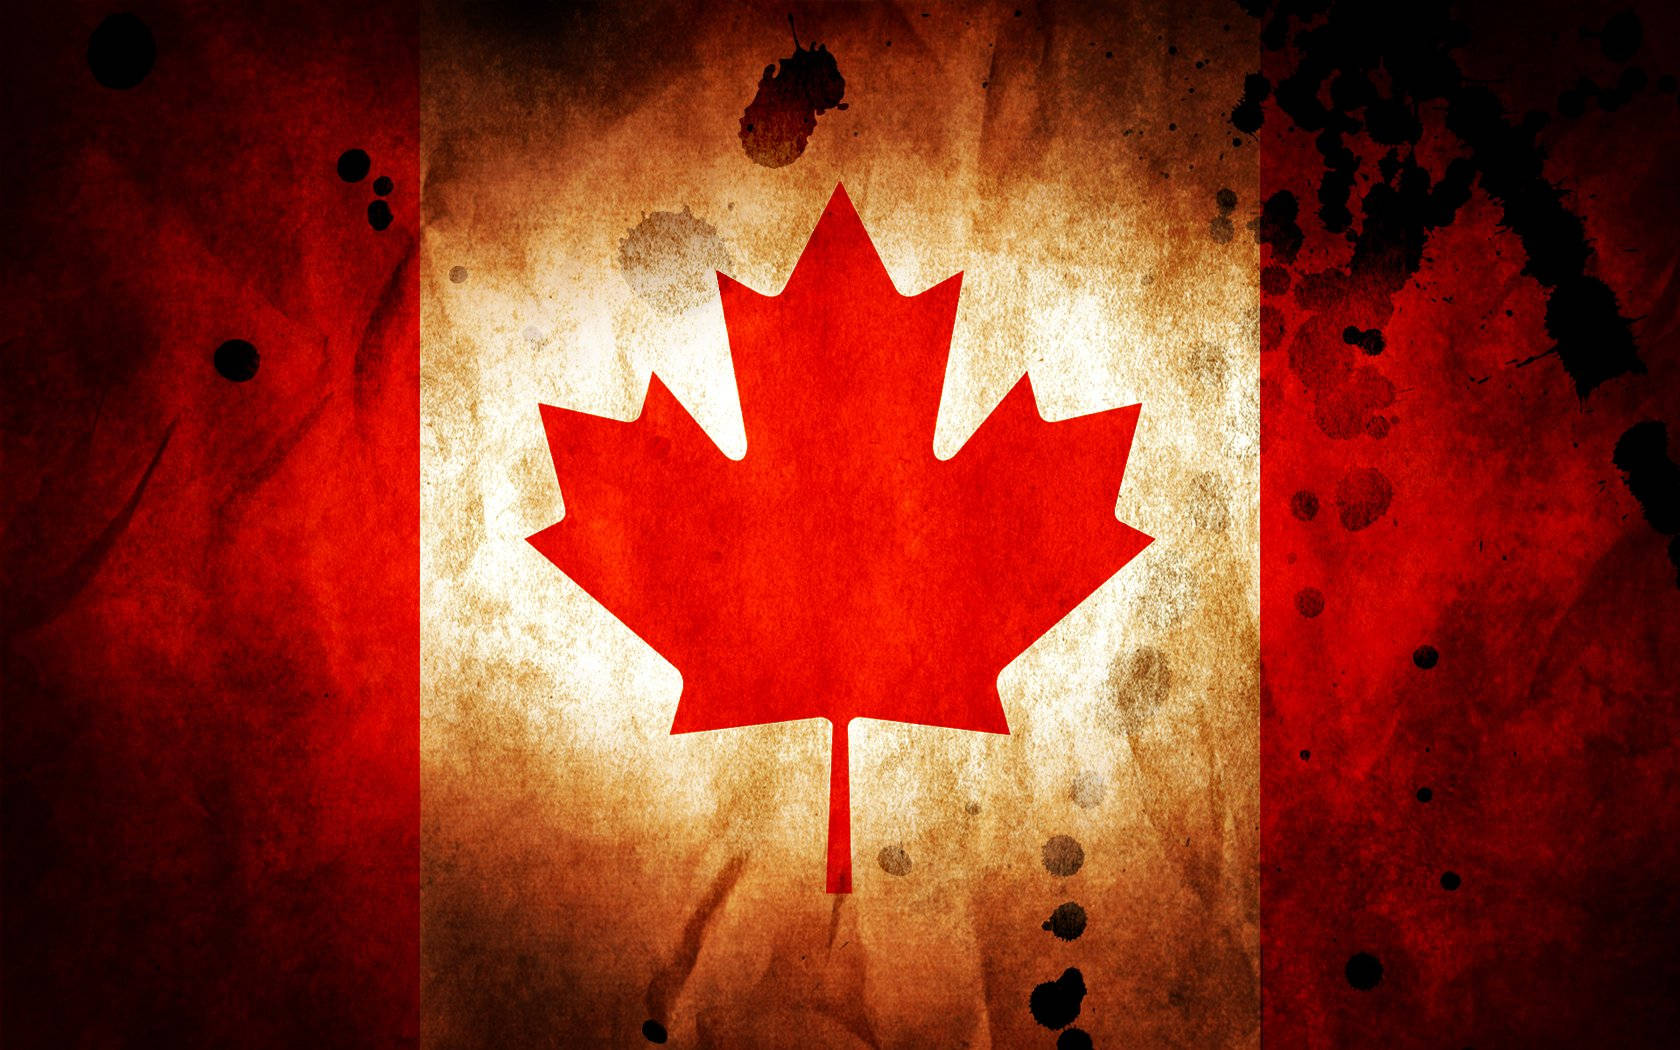 Vibrant Artistic Interpretation Of The Canadian Flag